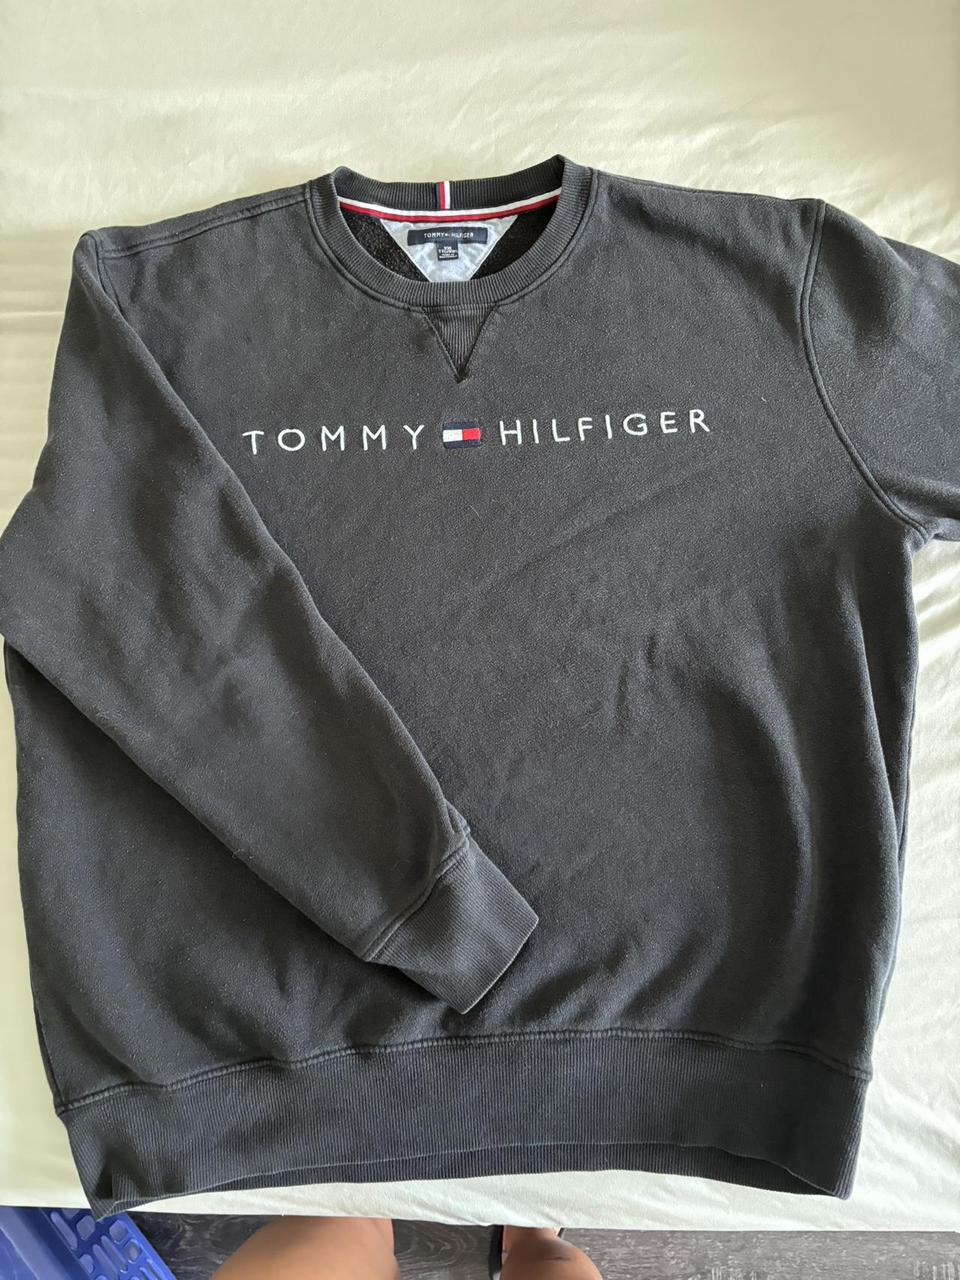 Tommy Hilfiger Men's Black Sweatshirt